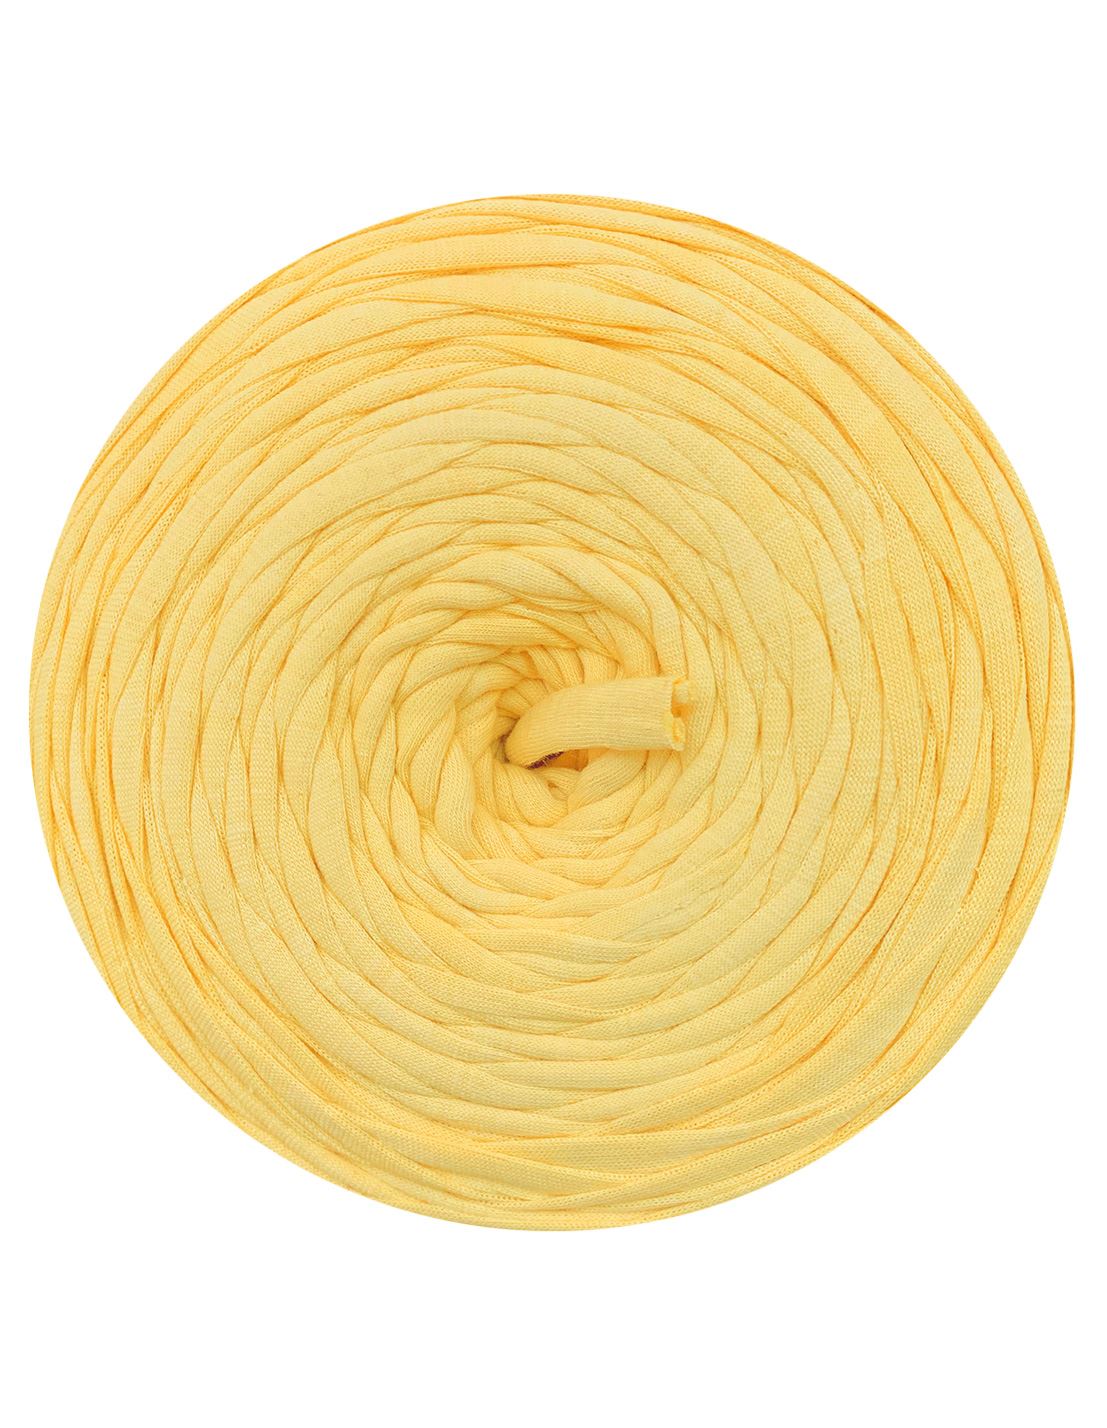 Daffodil yellow t-shirt yarn (100-120m)